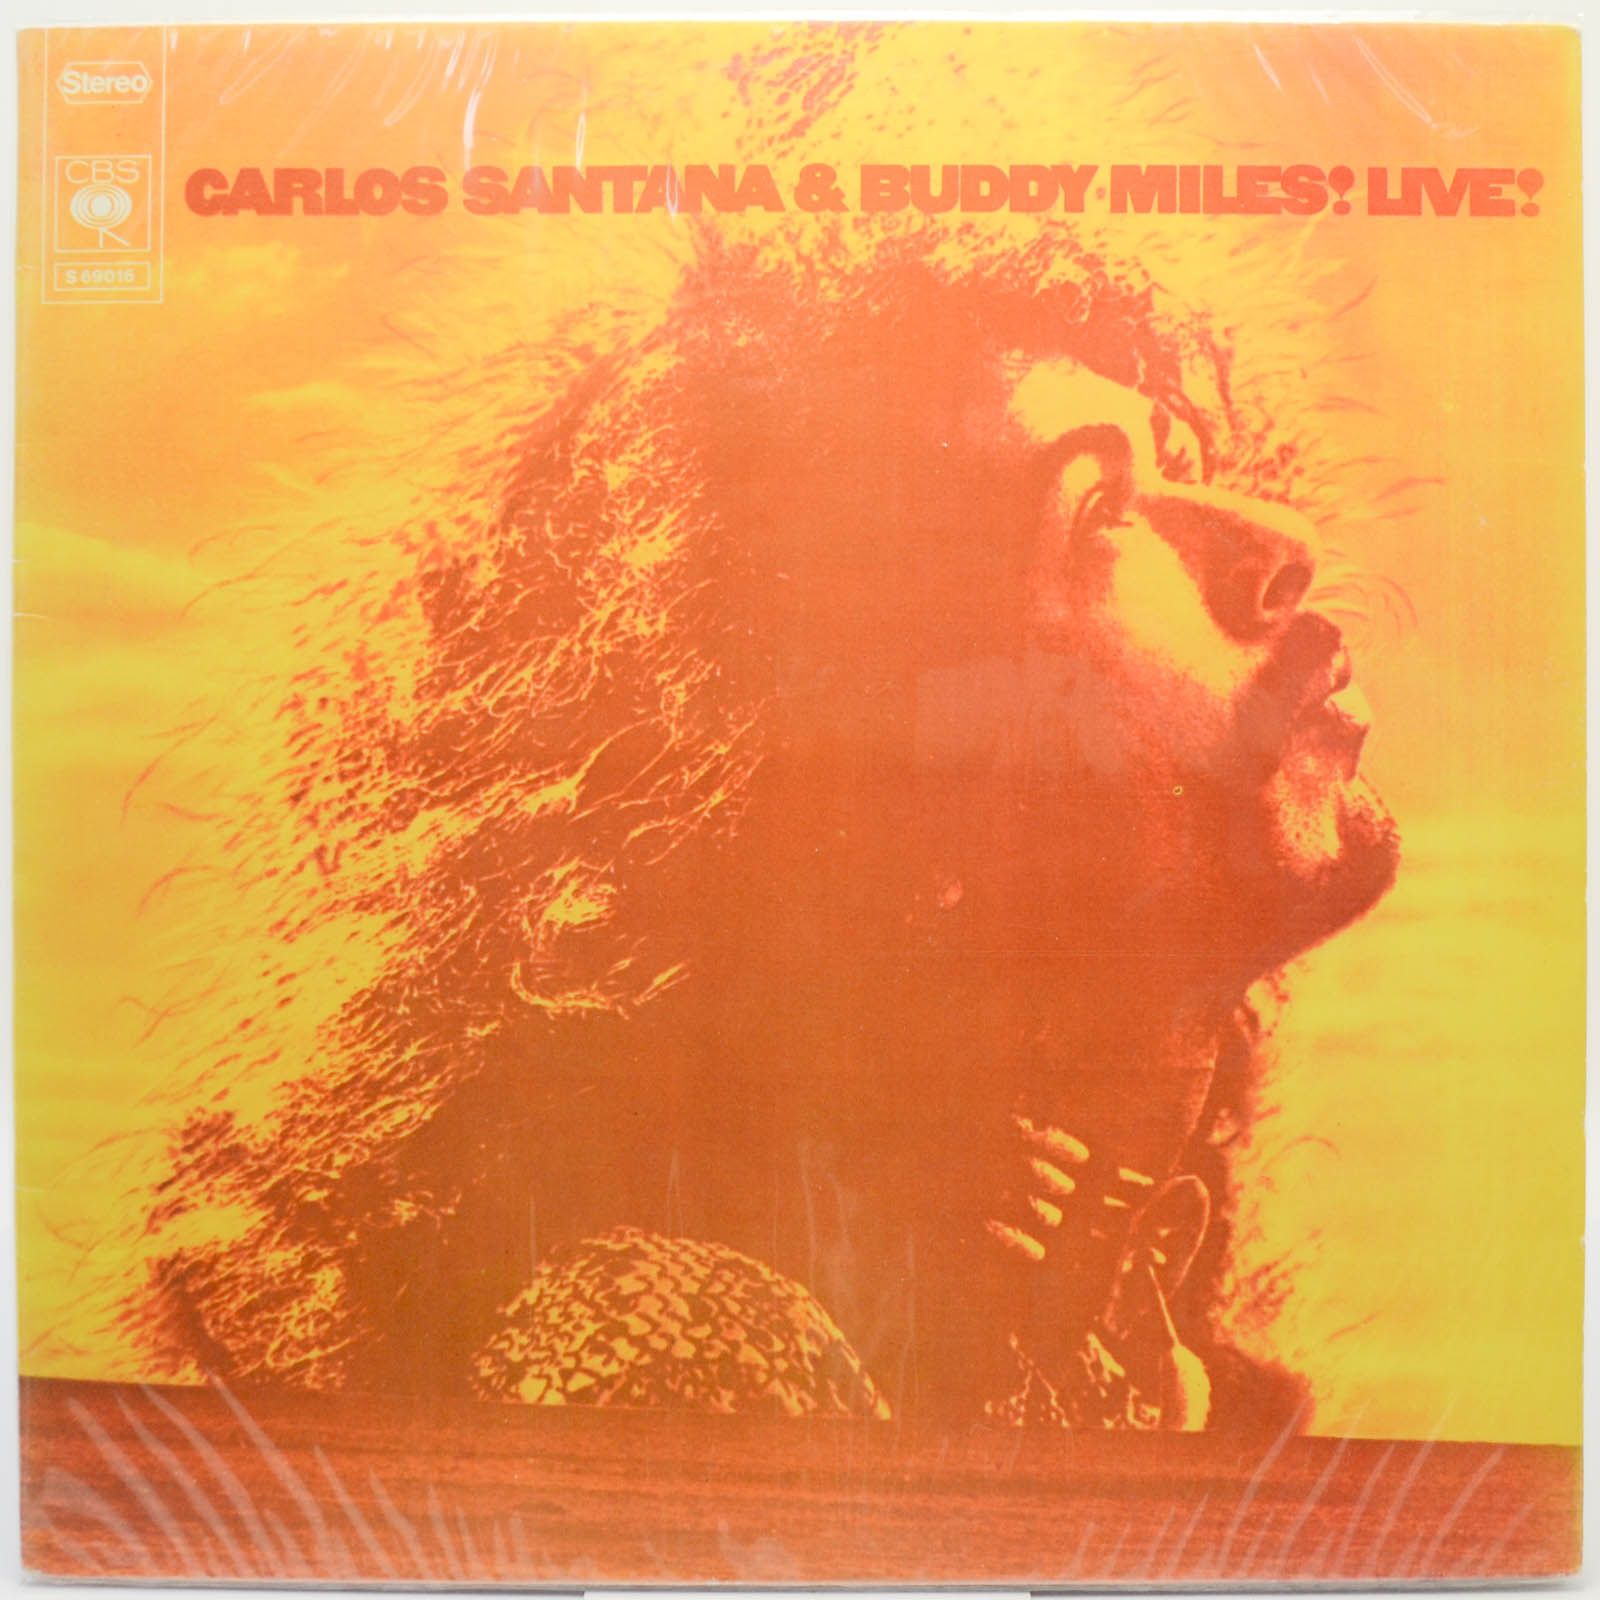 Carlos Santana & Buddy Miles — Carlos Santana & Buddy Miles! Live!, 1972